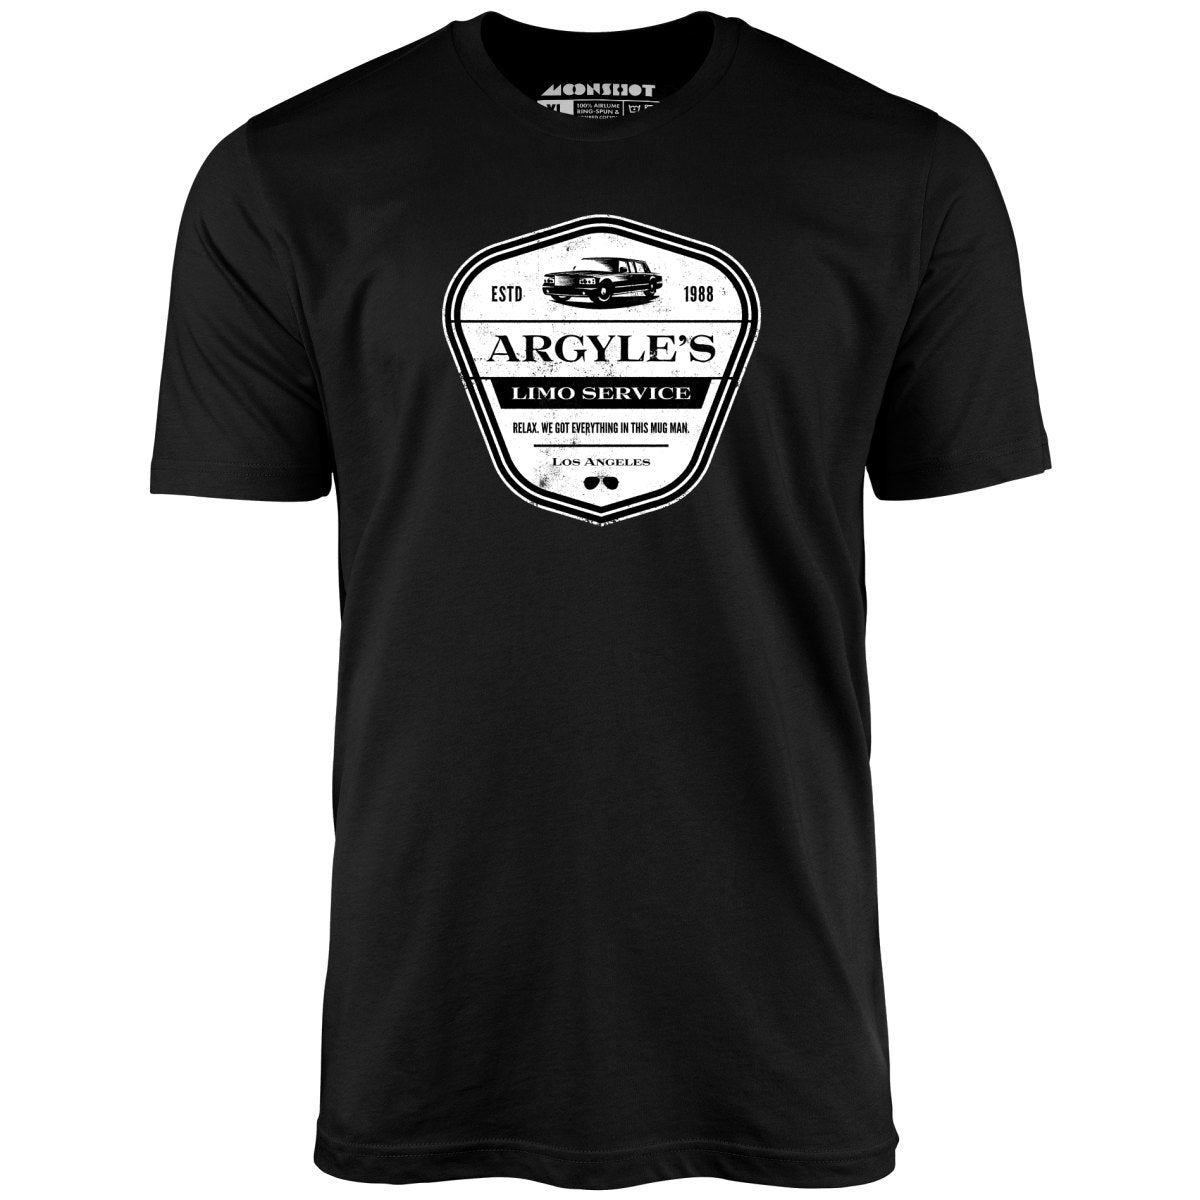 Argyle's Limo Service - Die Hard - Unisex T-Shirt